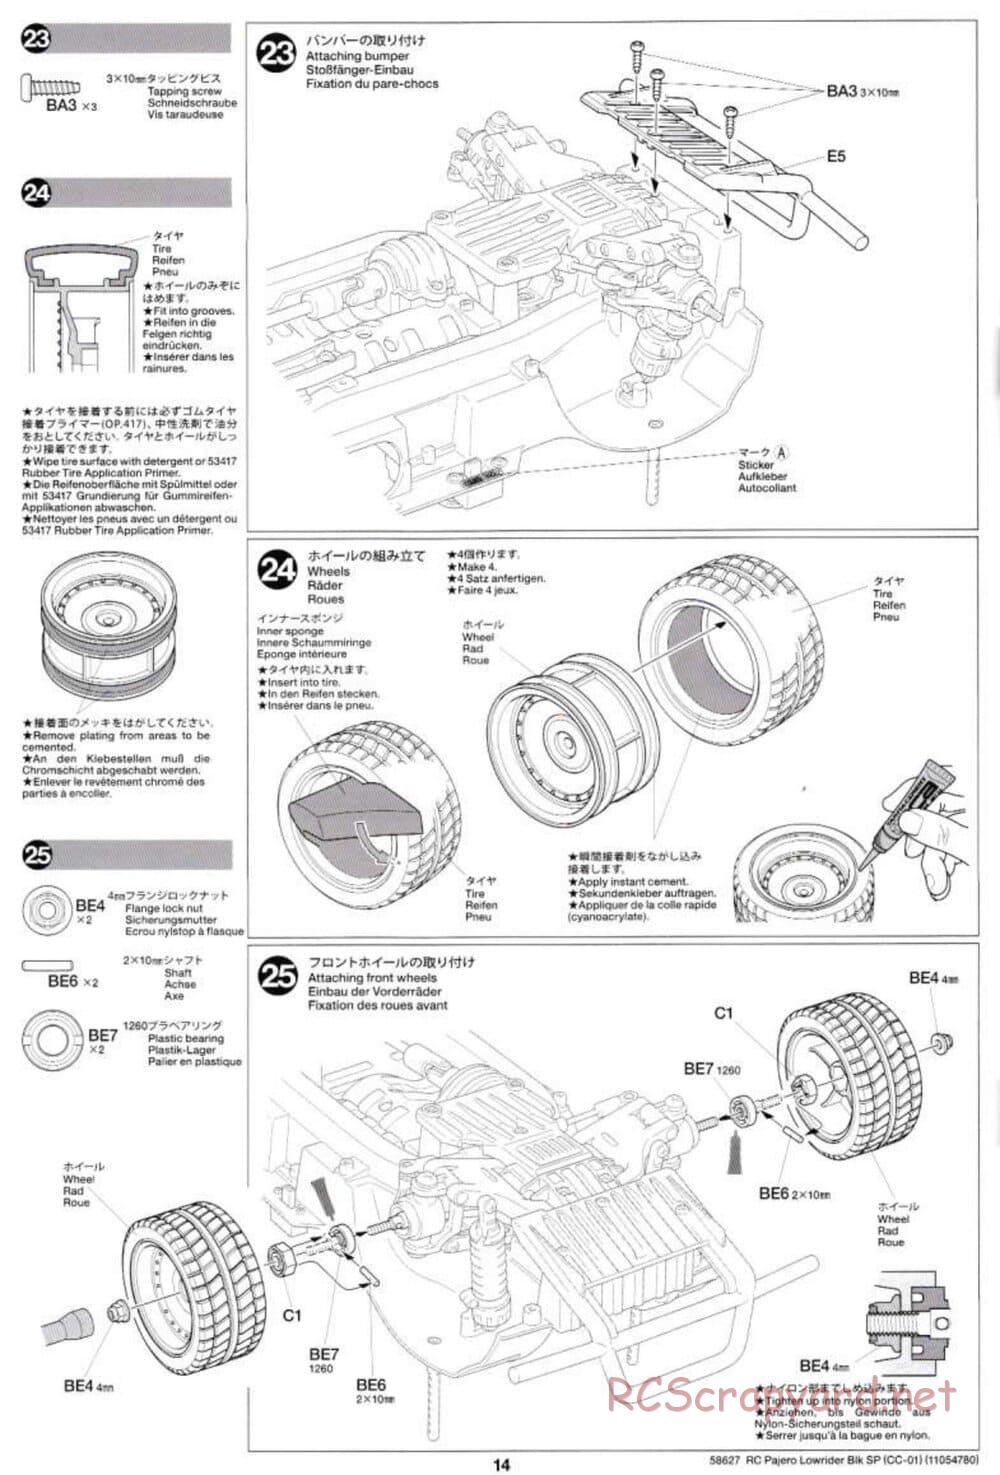 Tamiya - Mitsubishi Pajero Custom Lowrider Black Special - CC-01 Chassis - Manual - Page 14